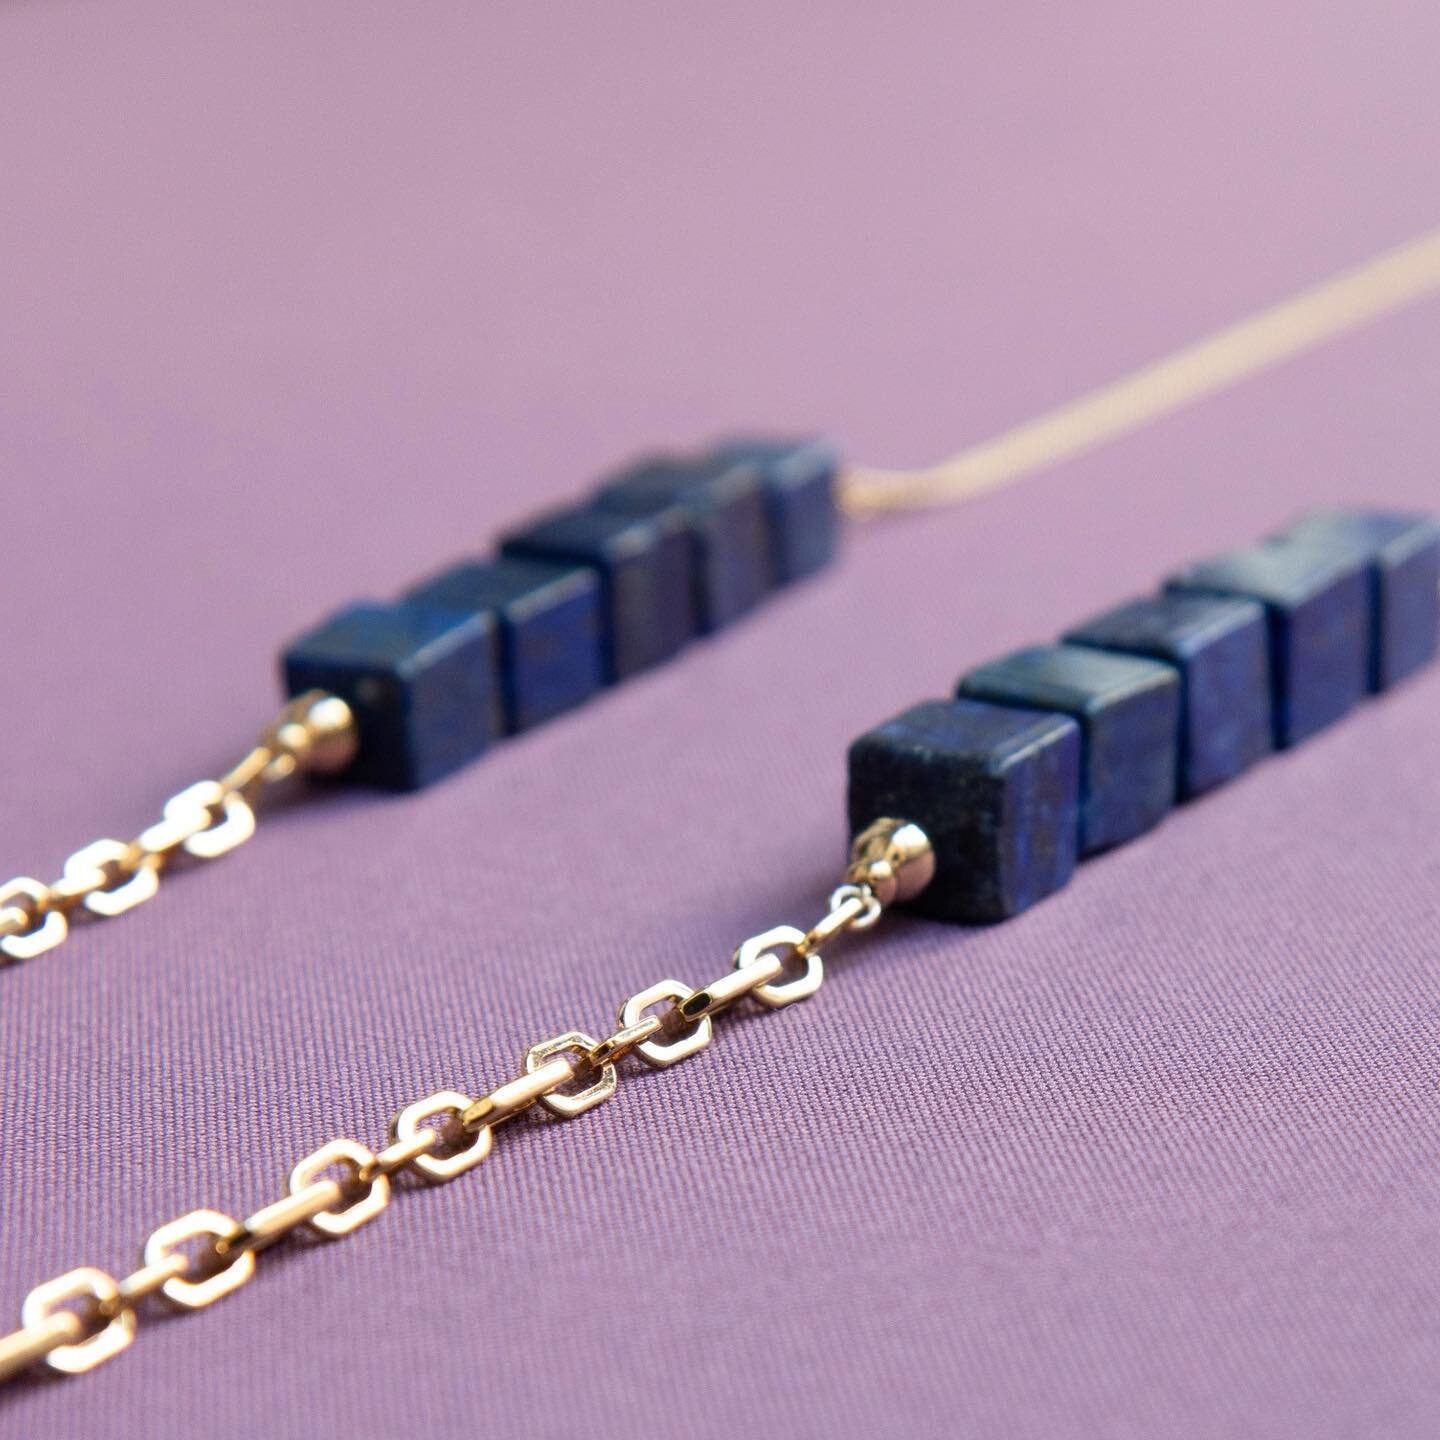 Un nouveau sautoir en Lapis Lazuli arrive bient&ocirc;t !!
.
#bijoux #jewelry #bois #wood #contemporain #contemporary #creation #jewelrydesigner #faitmain #handmade #bijouartisanal #artisanat #artisan #bijouterie #handmadejewelry #bijoufaitmain #bijo